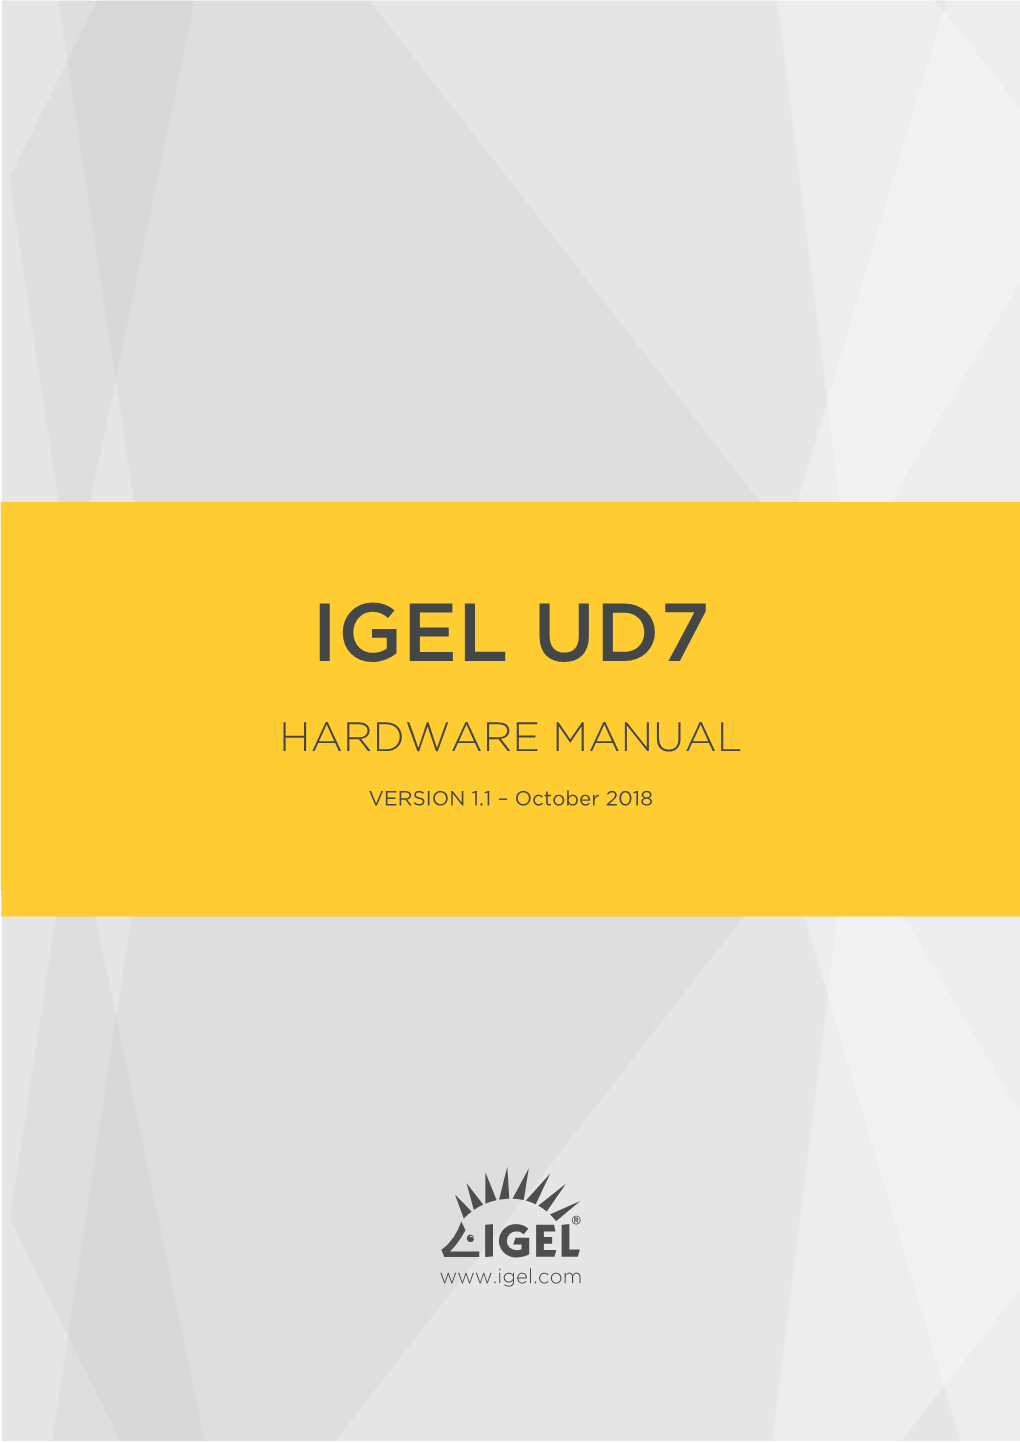 Igel Ud7 Hardware Manual